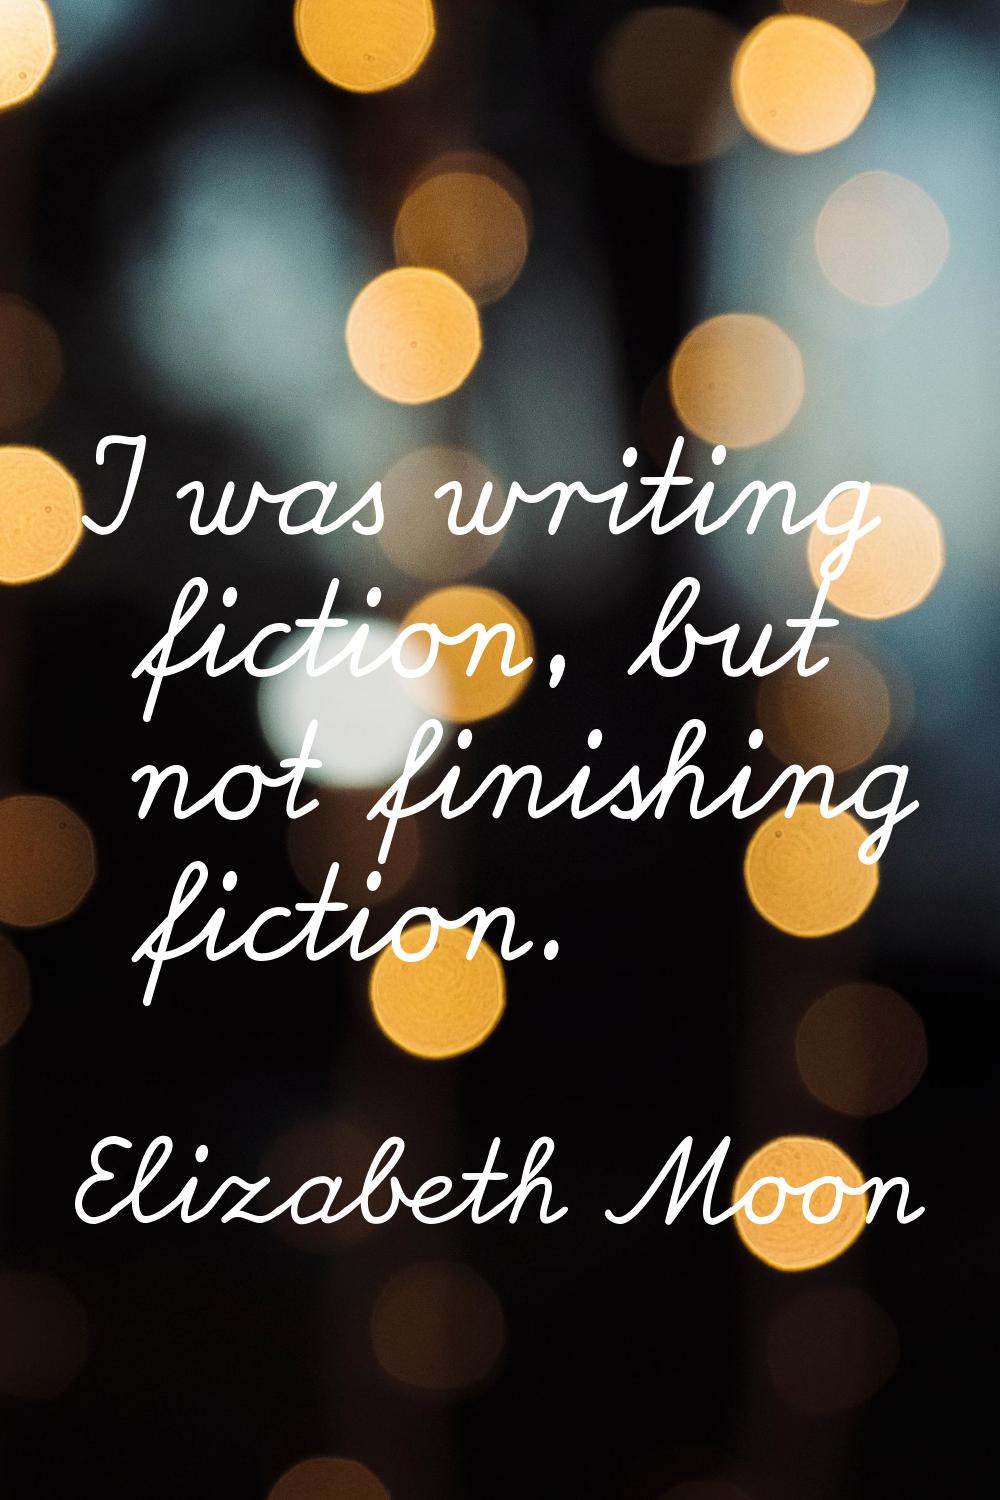 I was writing fiction, but not finishing fiction.